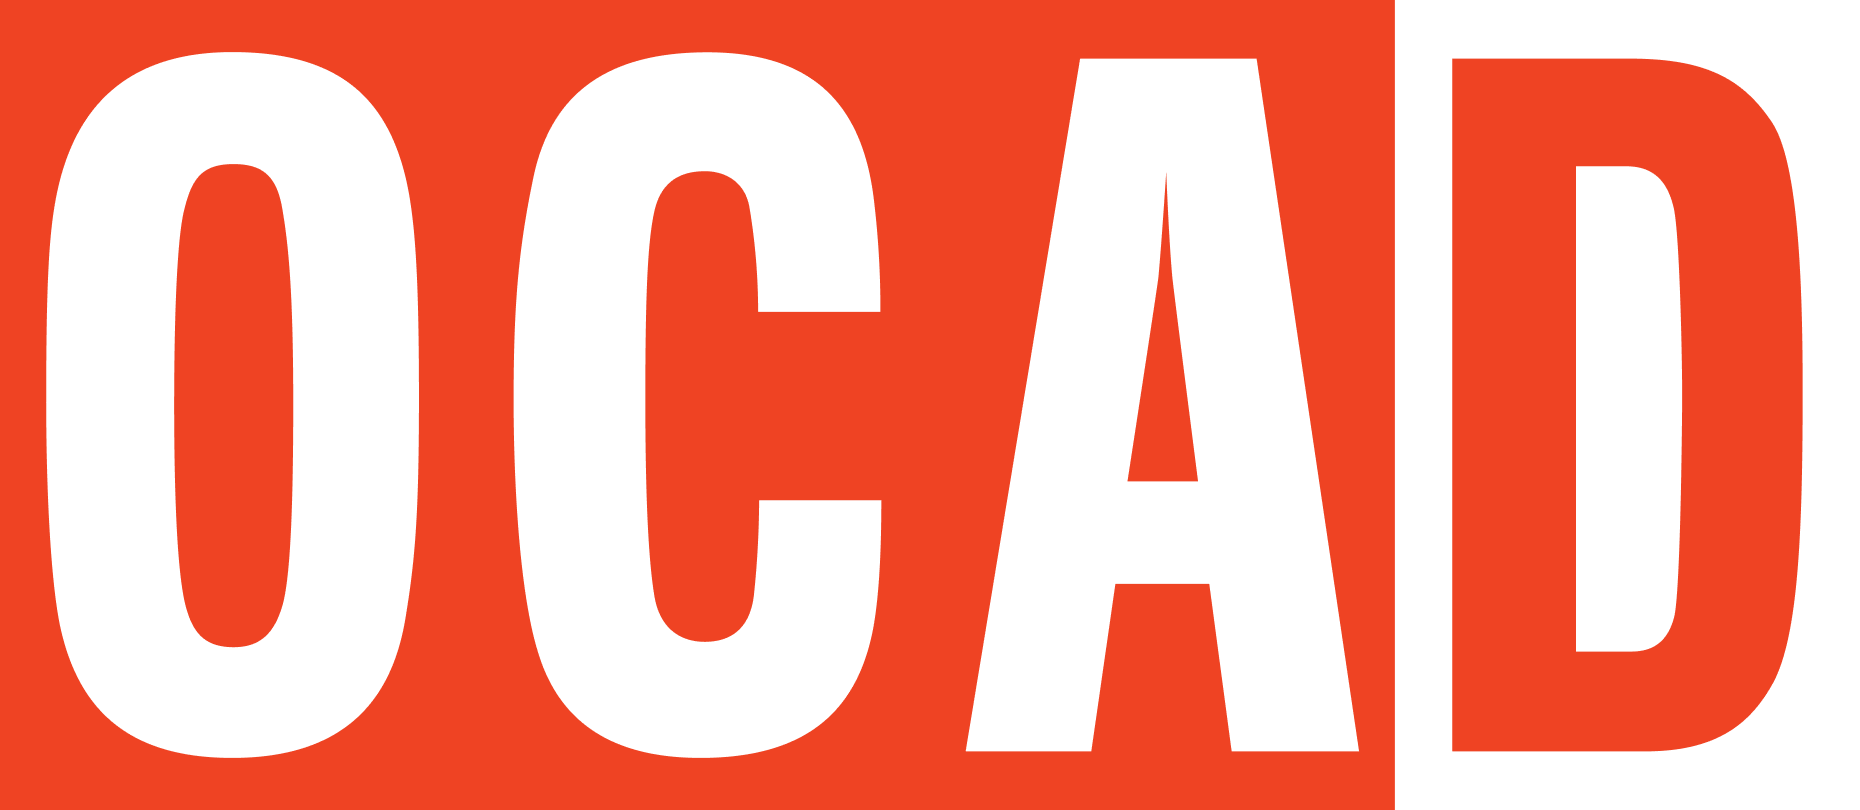 Organized Communities Against Deportations logo